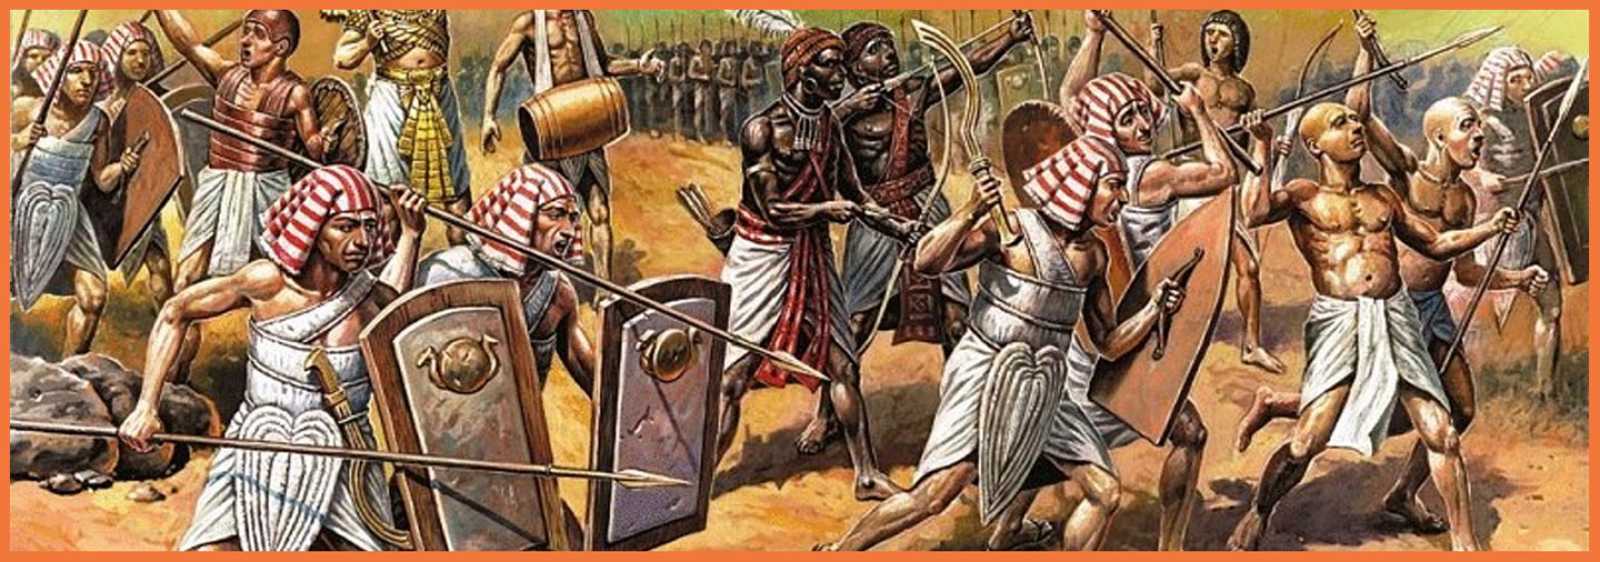 Оружие эпохи меди и бронзы (ІІІ – I тыс. до н.э.)